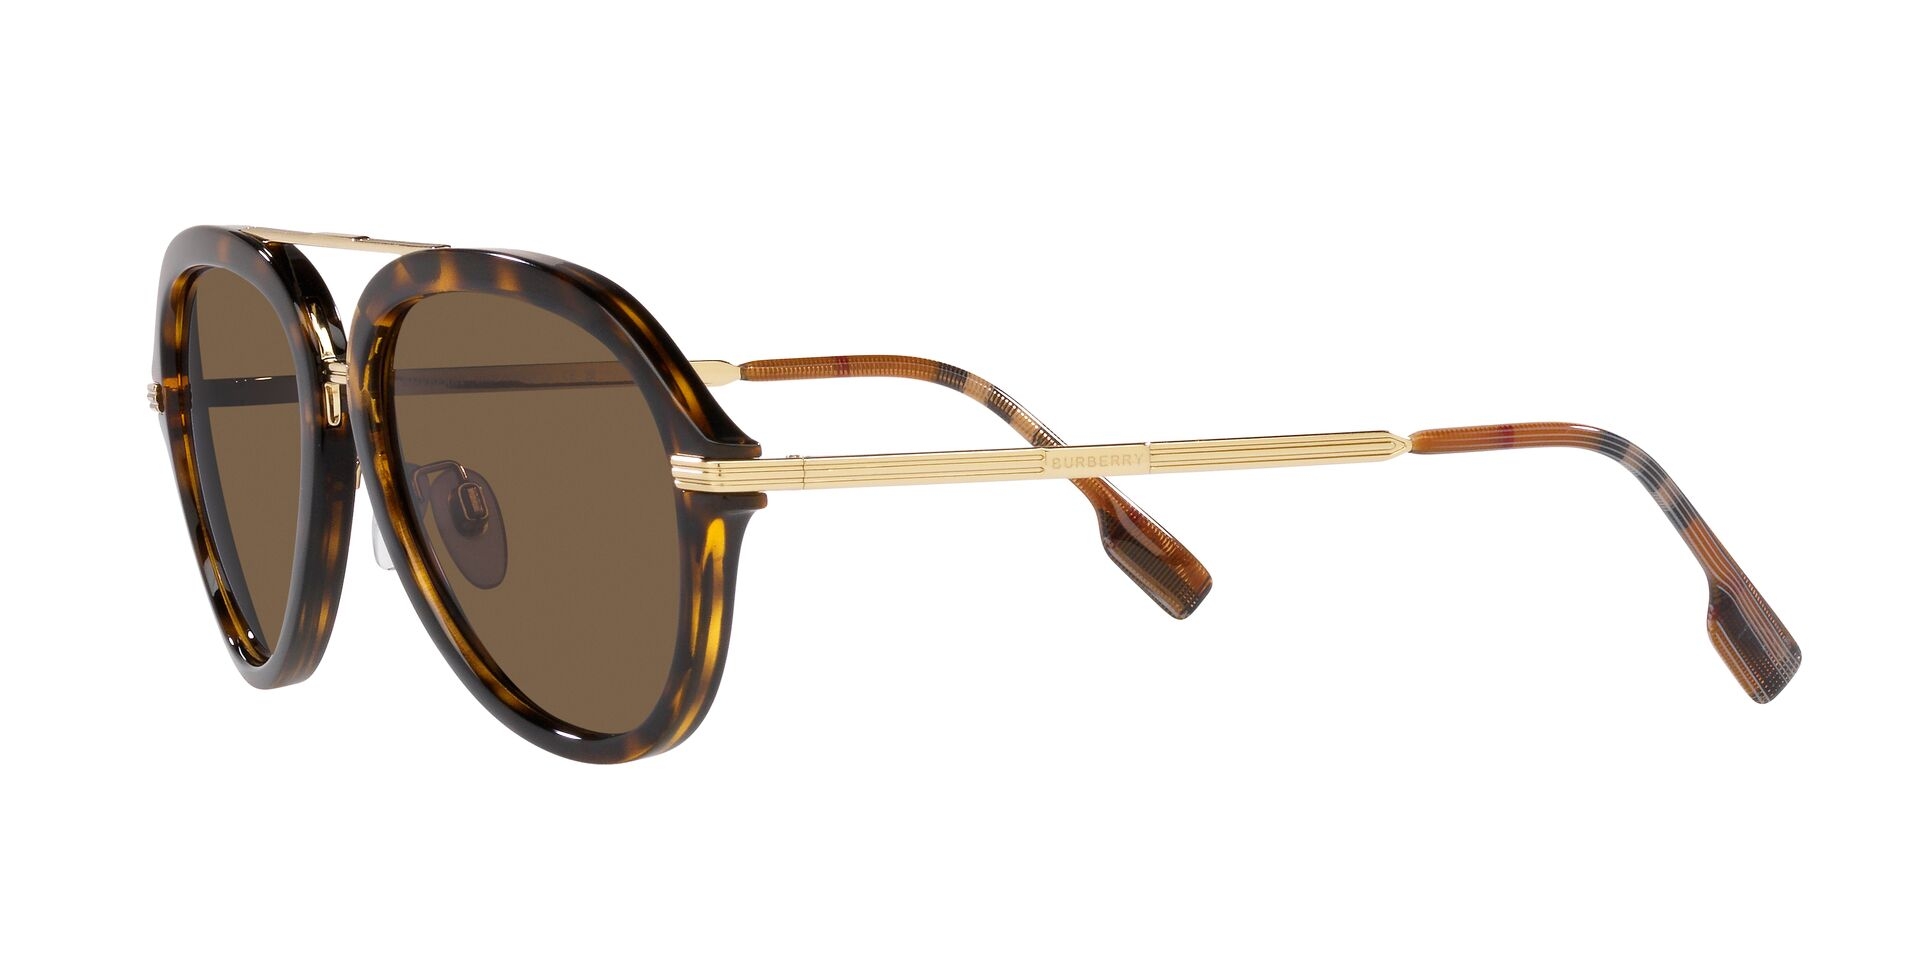 Buy Burberry Aviator Sunglasses (Grey) (Be 3072 1003/B2) at Amazon.in